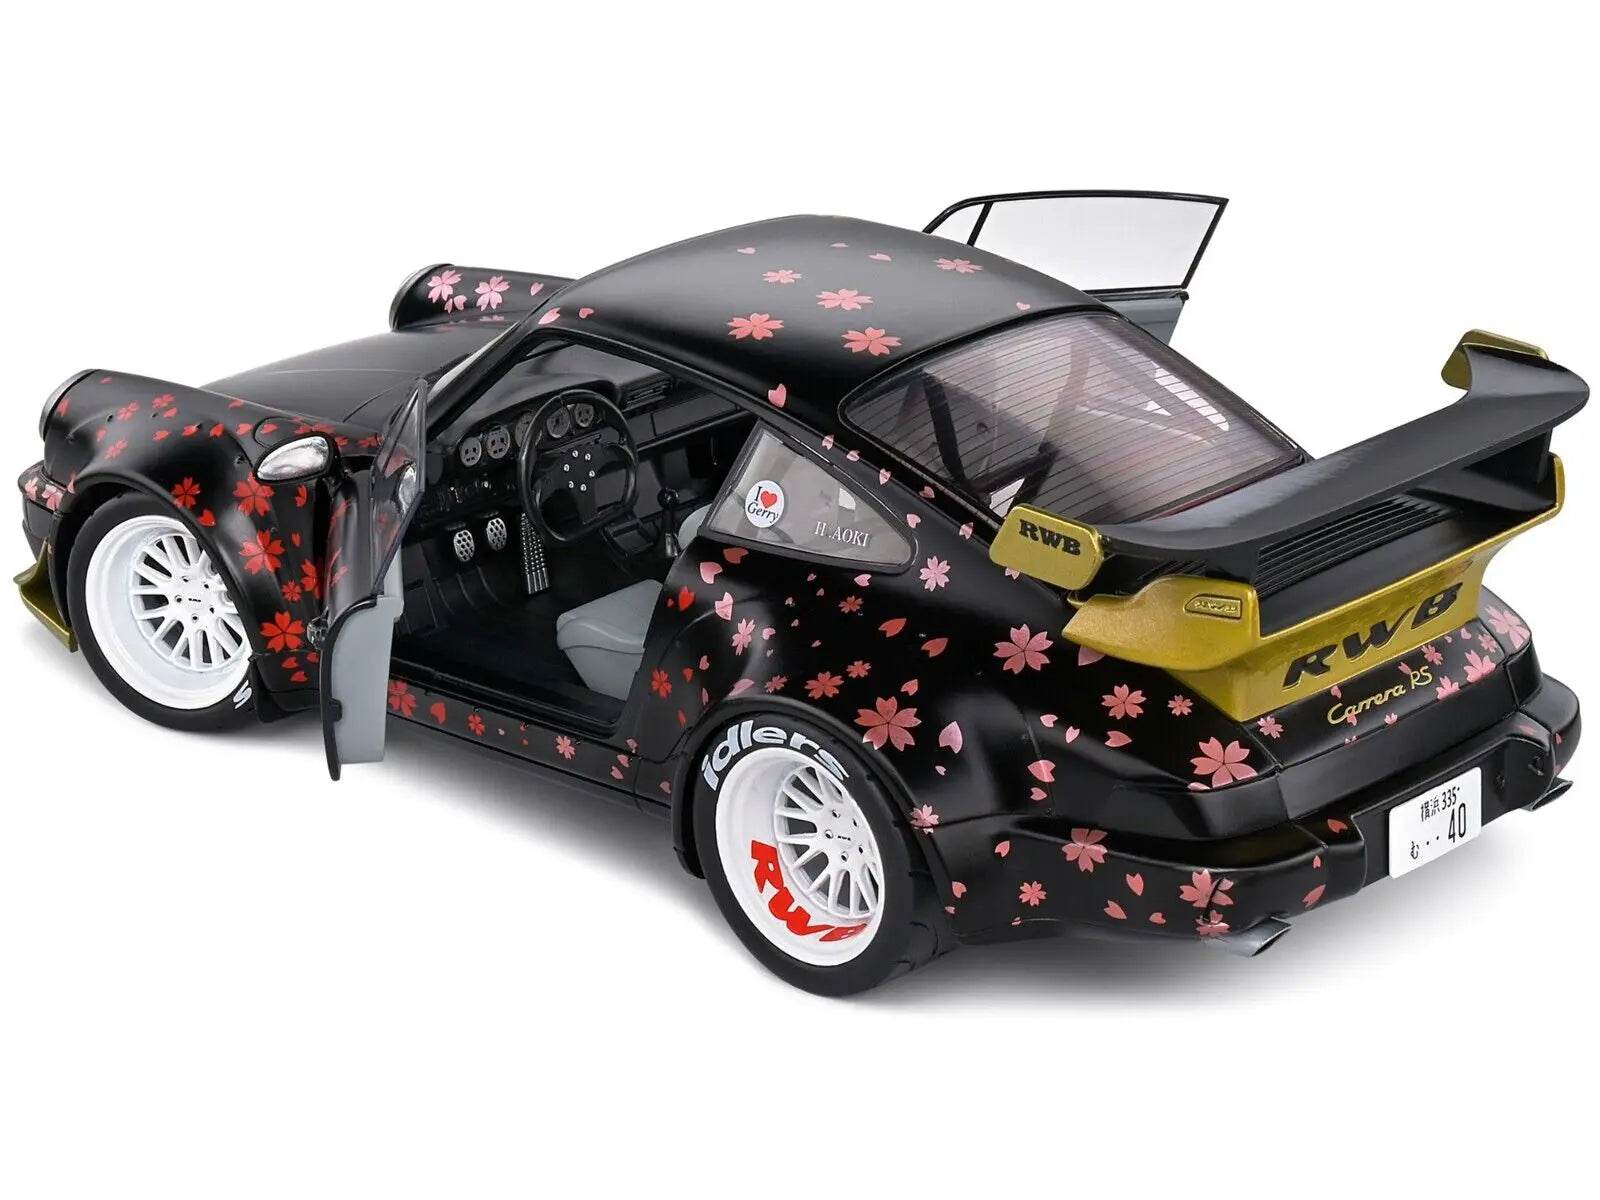 RWB Aoki Matt Black with Cherry Blossom Graphics "Rauh WeltBegriff" 1/18 Scale - Perfect Diecast